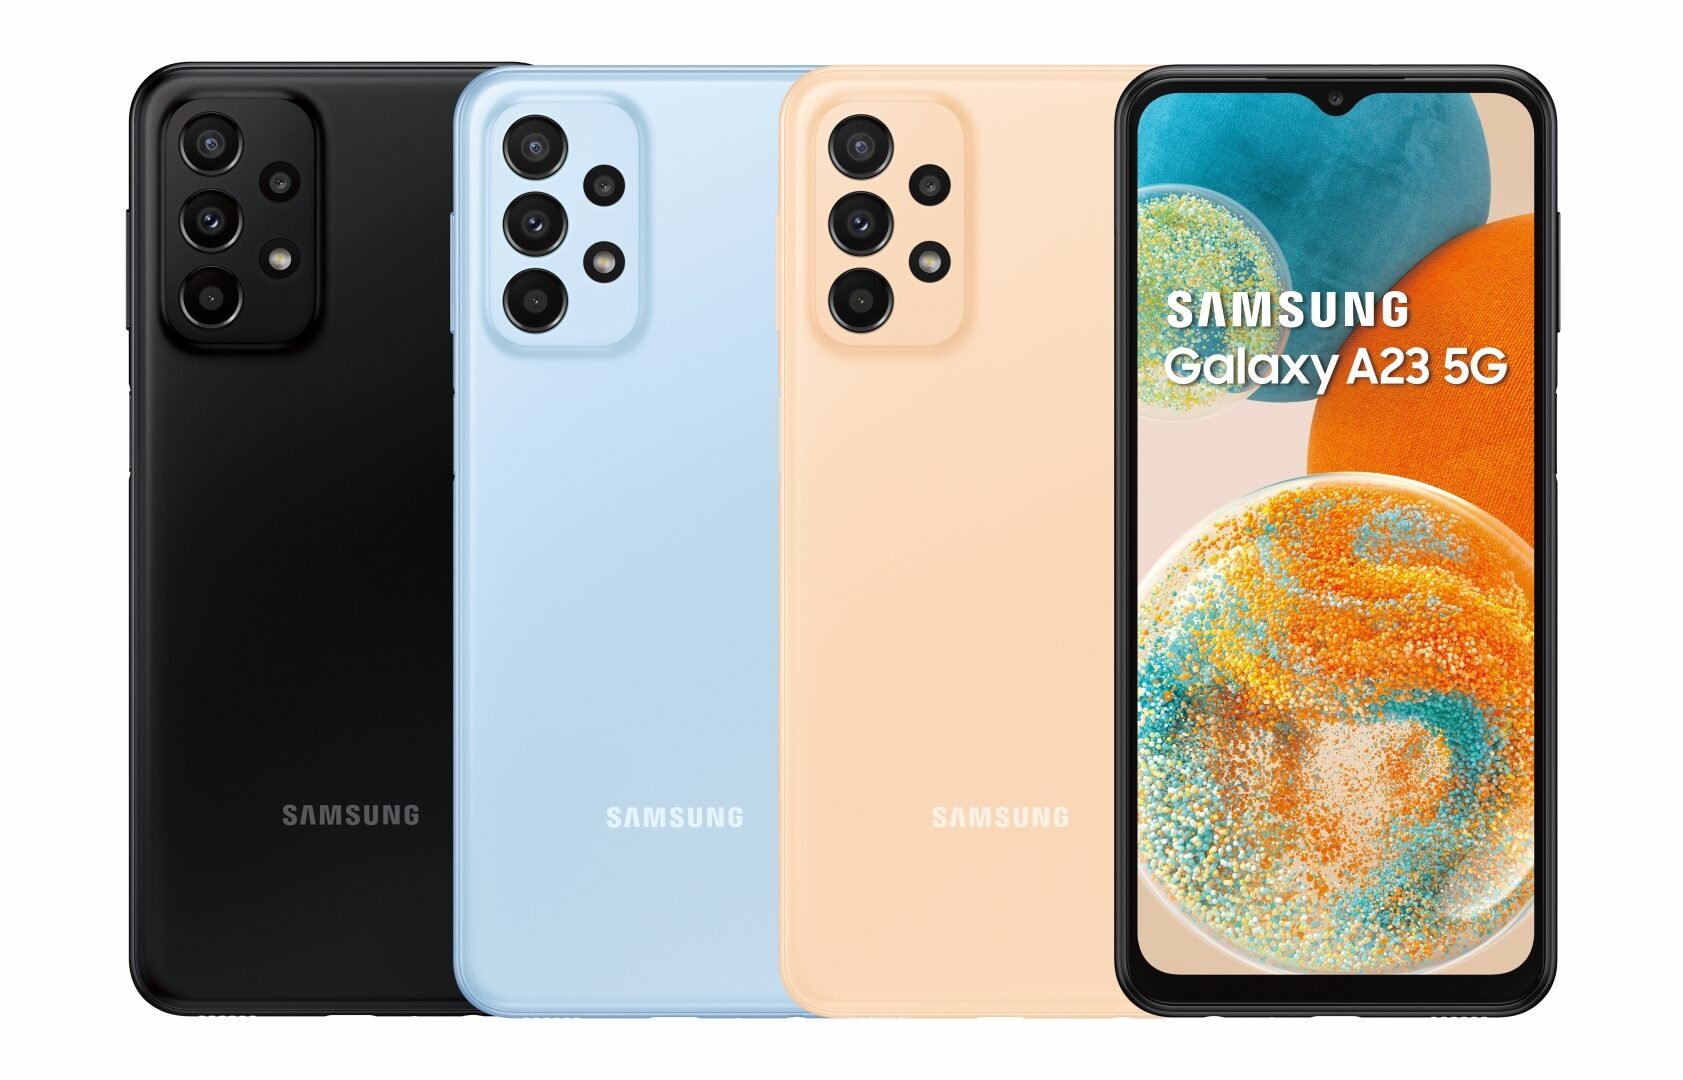 Samsung Galaxy A23 5G: Samsung confirms Galaxy A23 5G, Galaxy A14